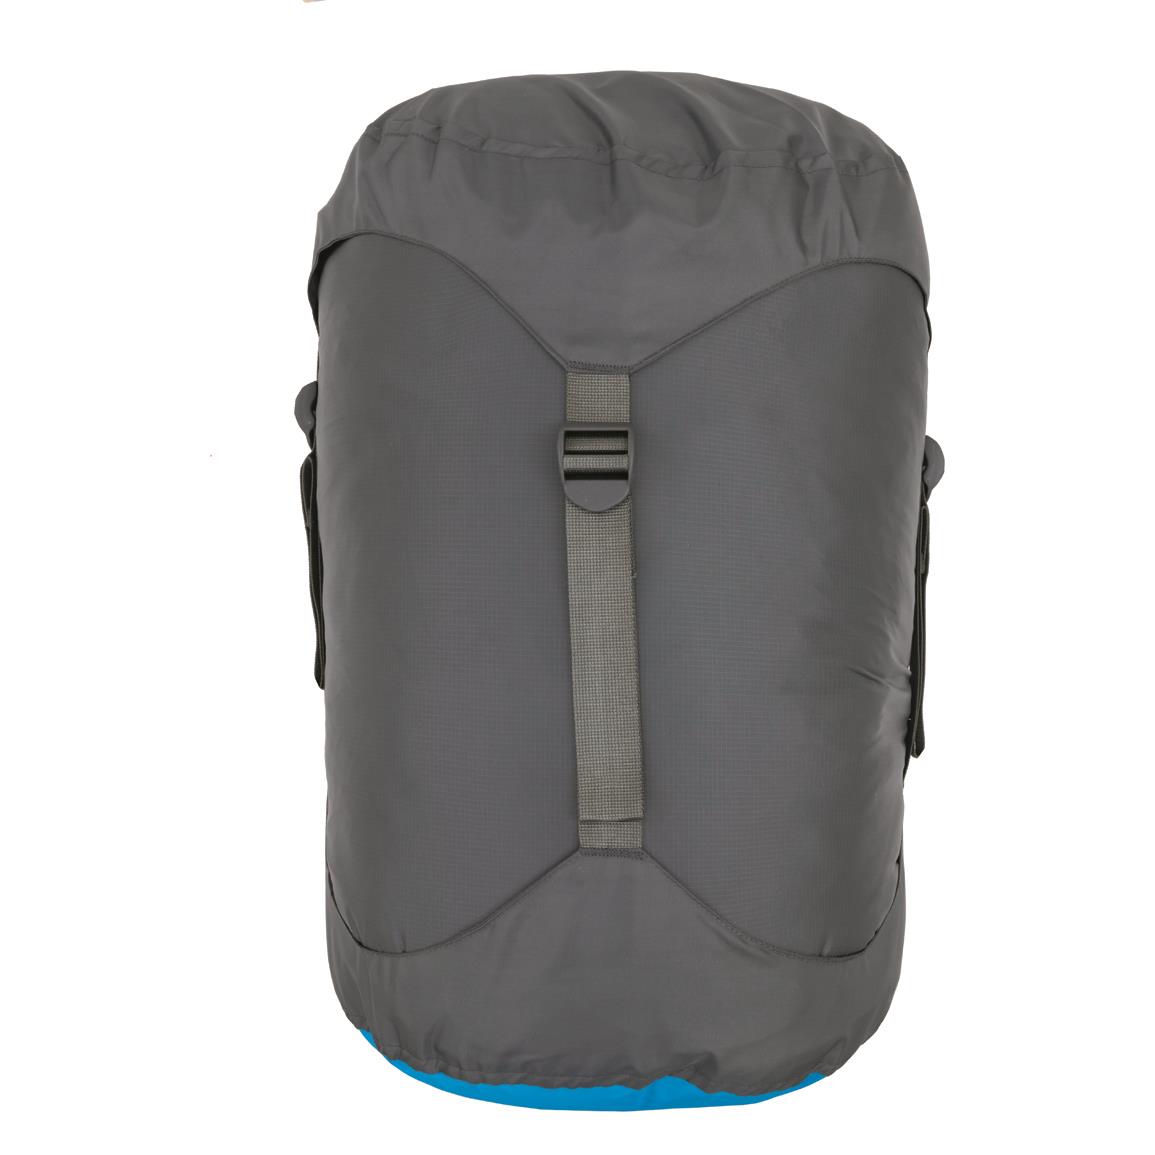 SealLine Blocker Zip Sack - 719298, Dry Bags & Sacks at Sportsman's Guide